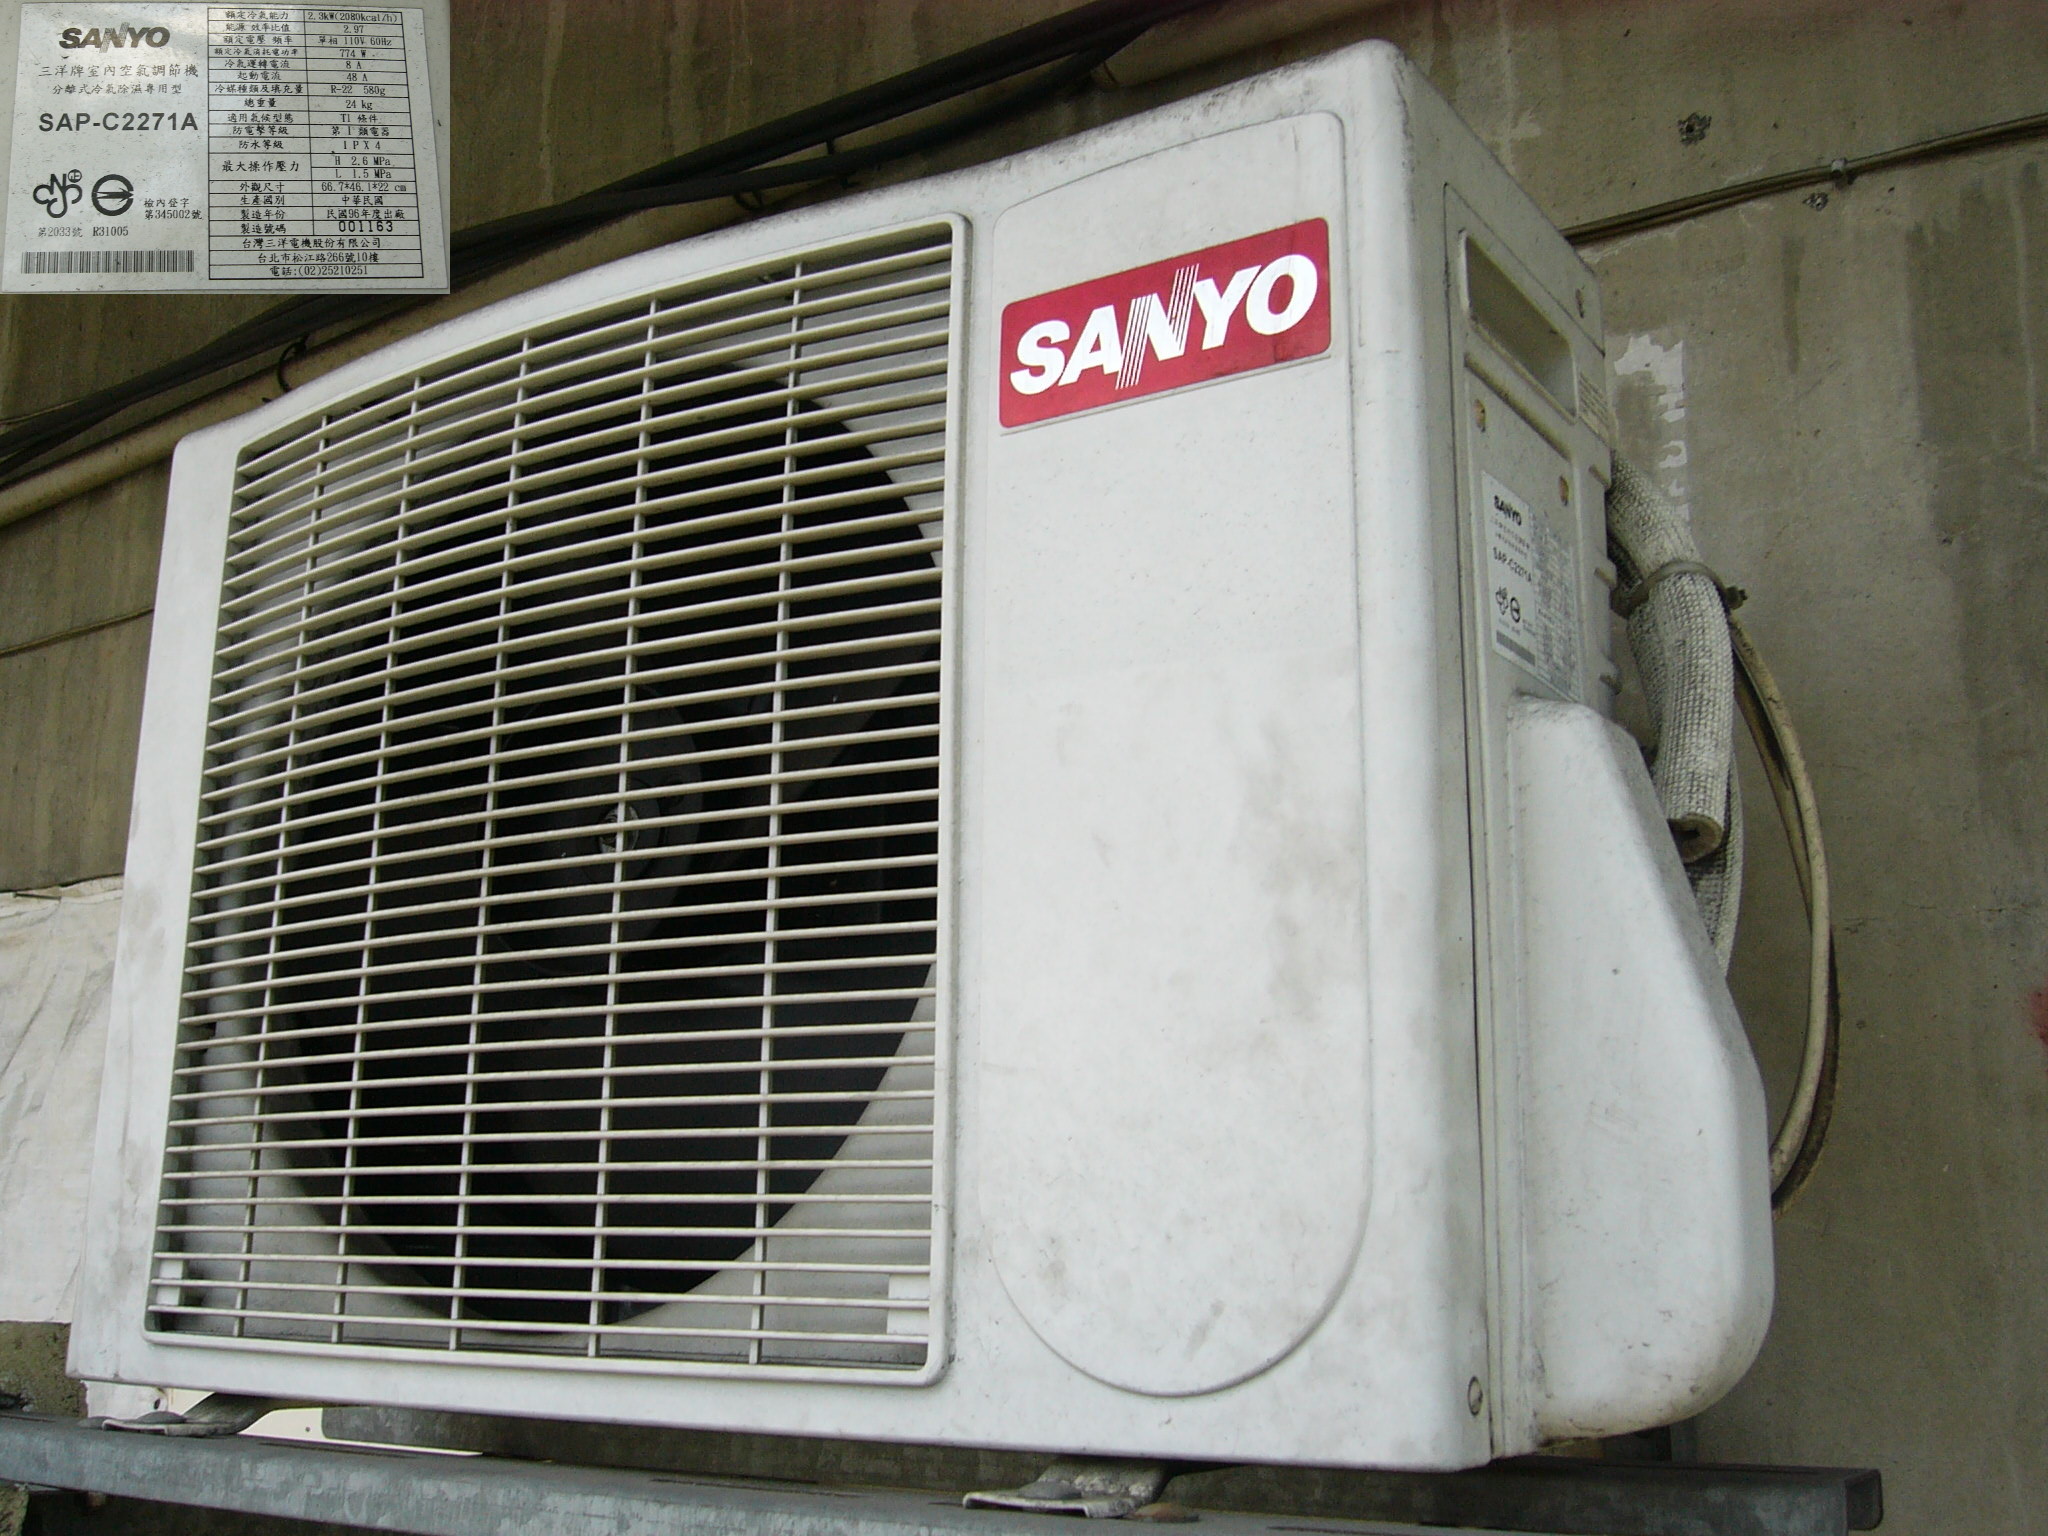 File:Sanyo Electric (Taiwan) SAP-C2271A 20100930.jpg - Wikimedia Commons